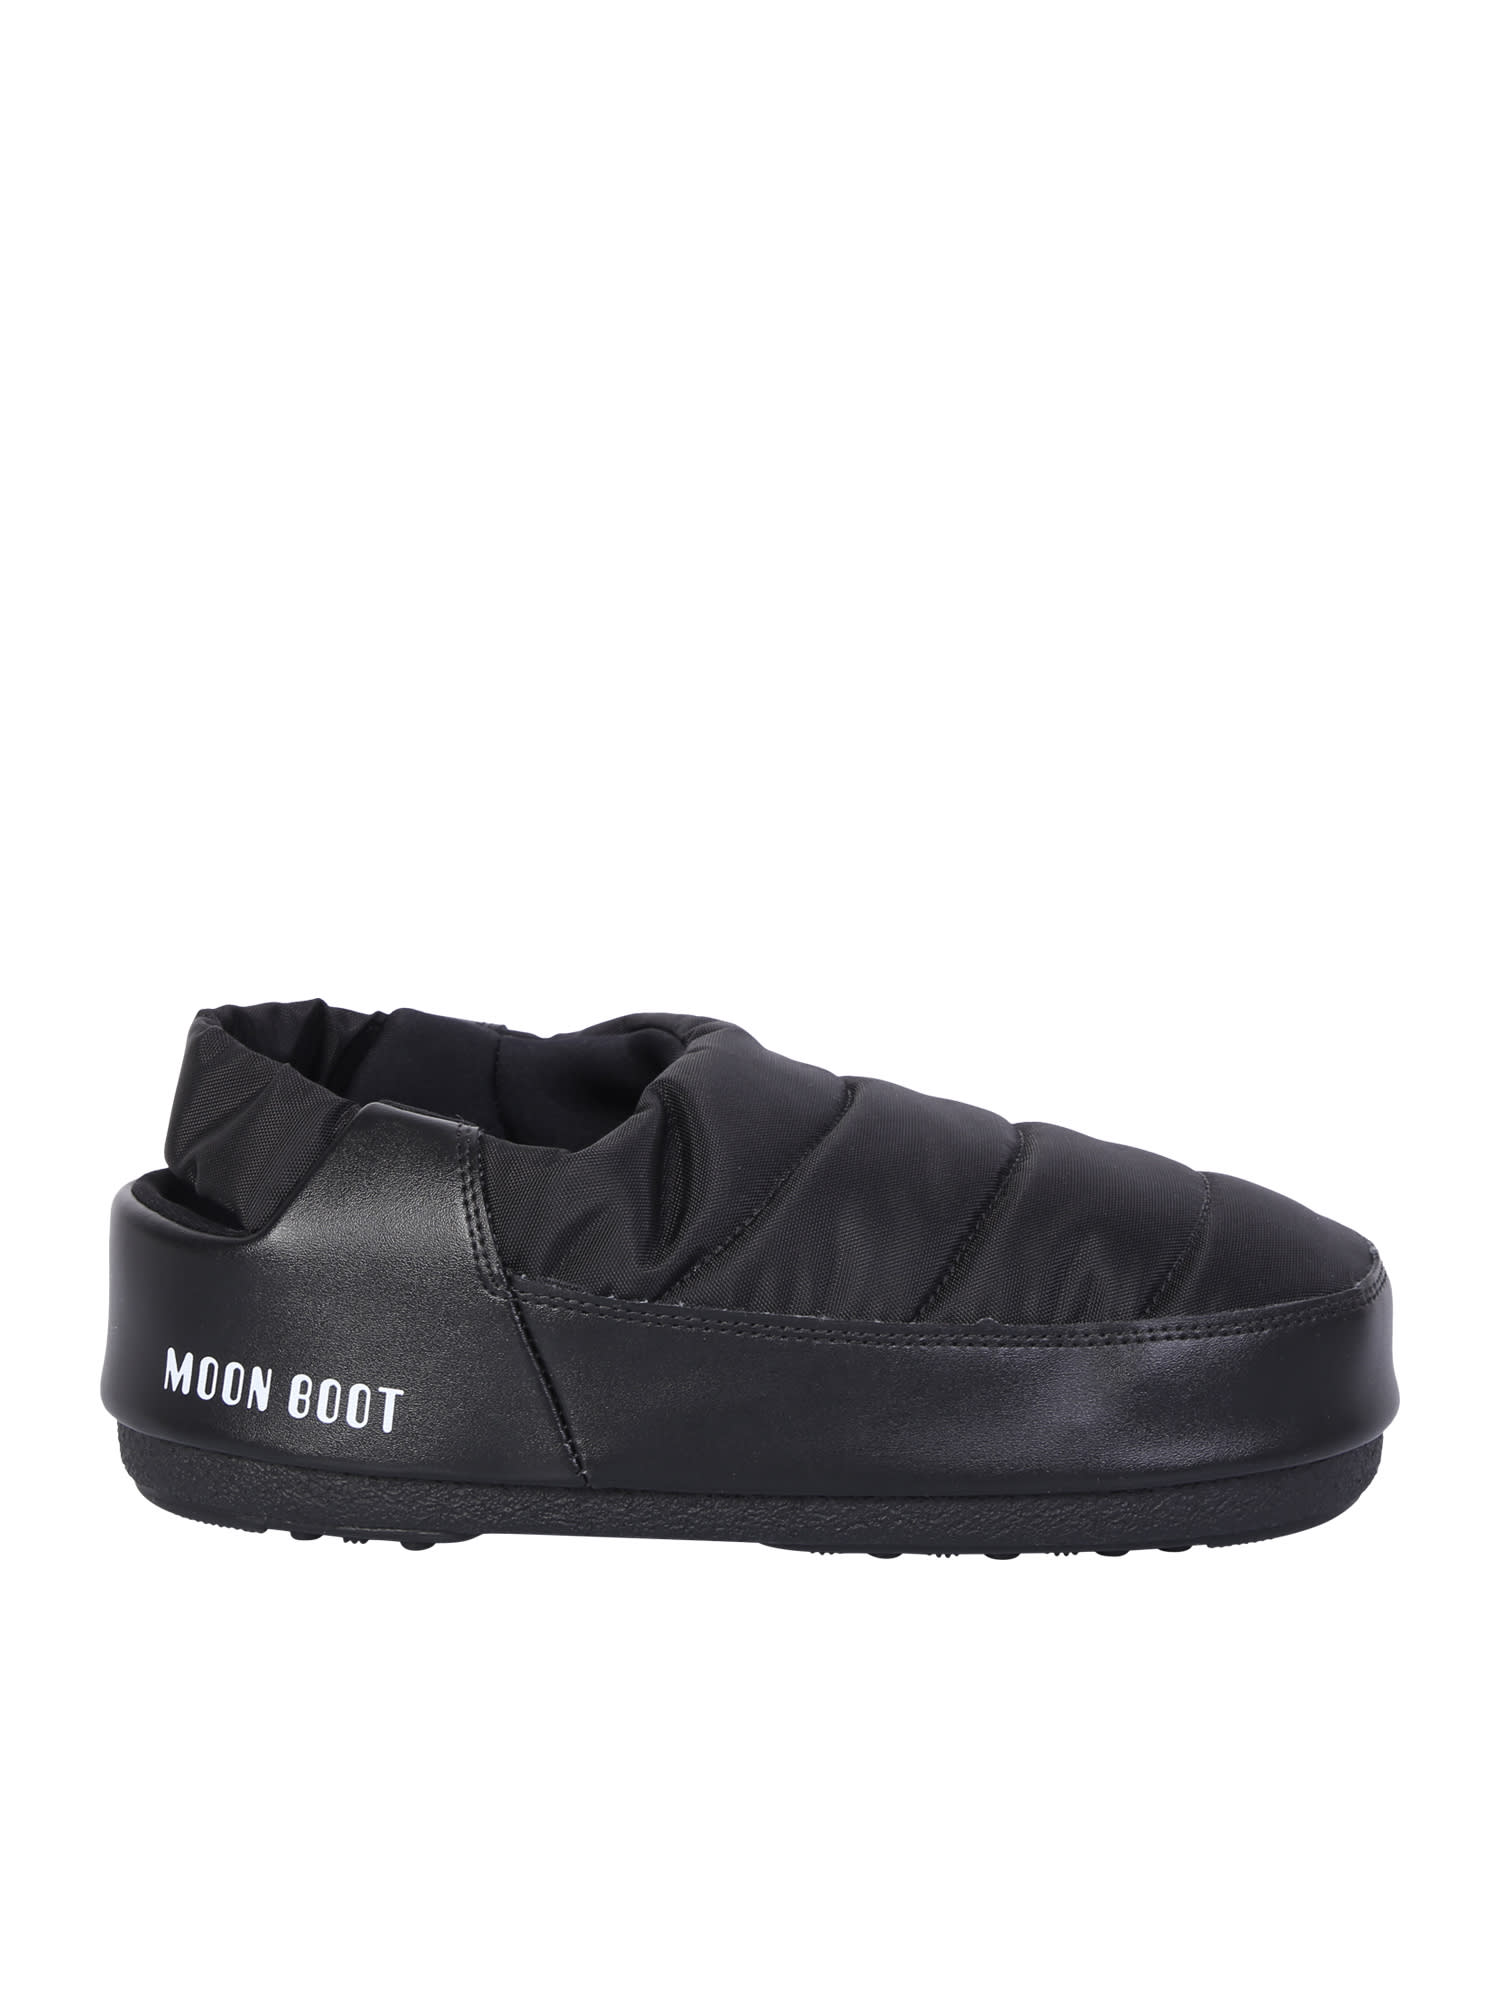 Shop Moon Boot Black Evolution Sandals